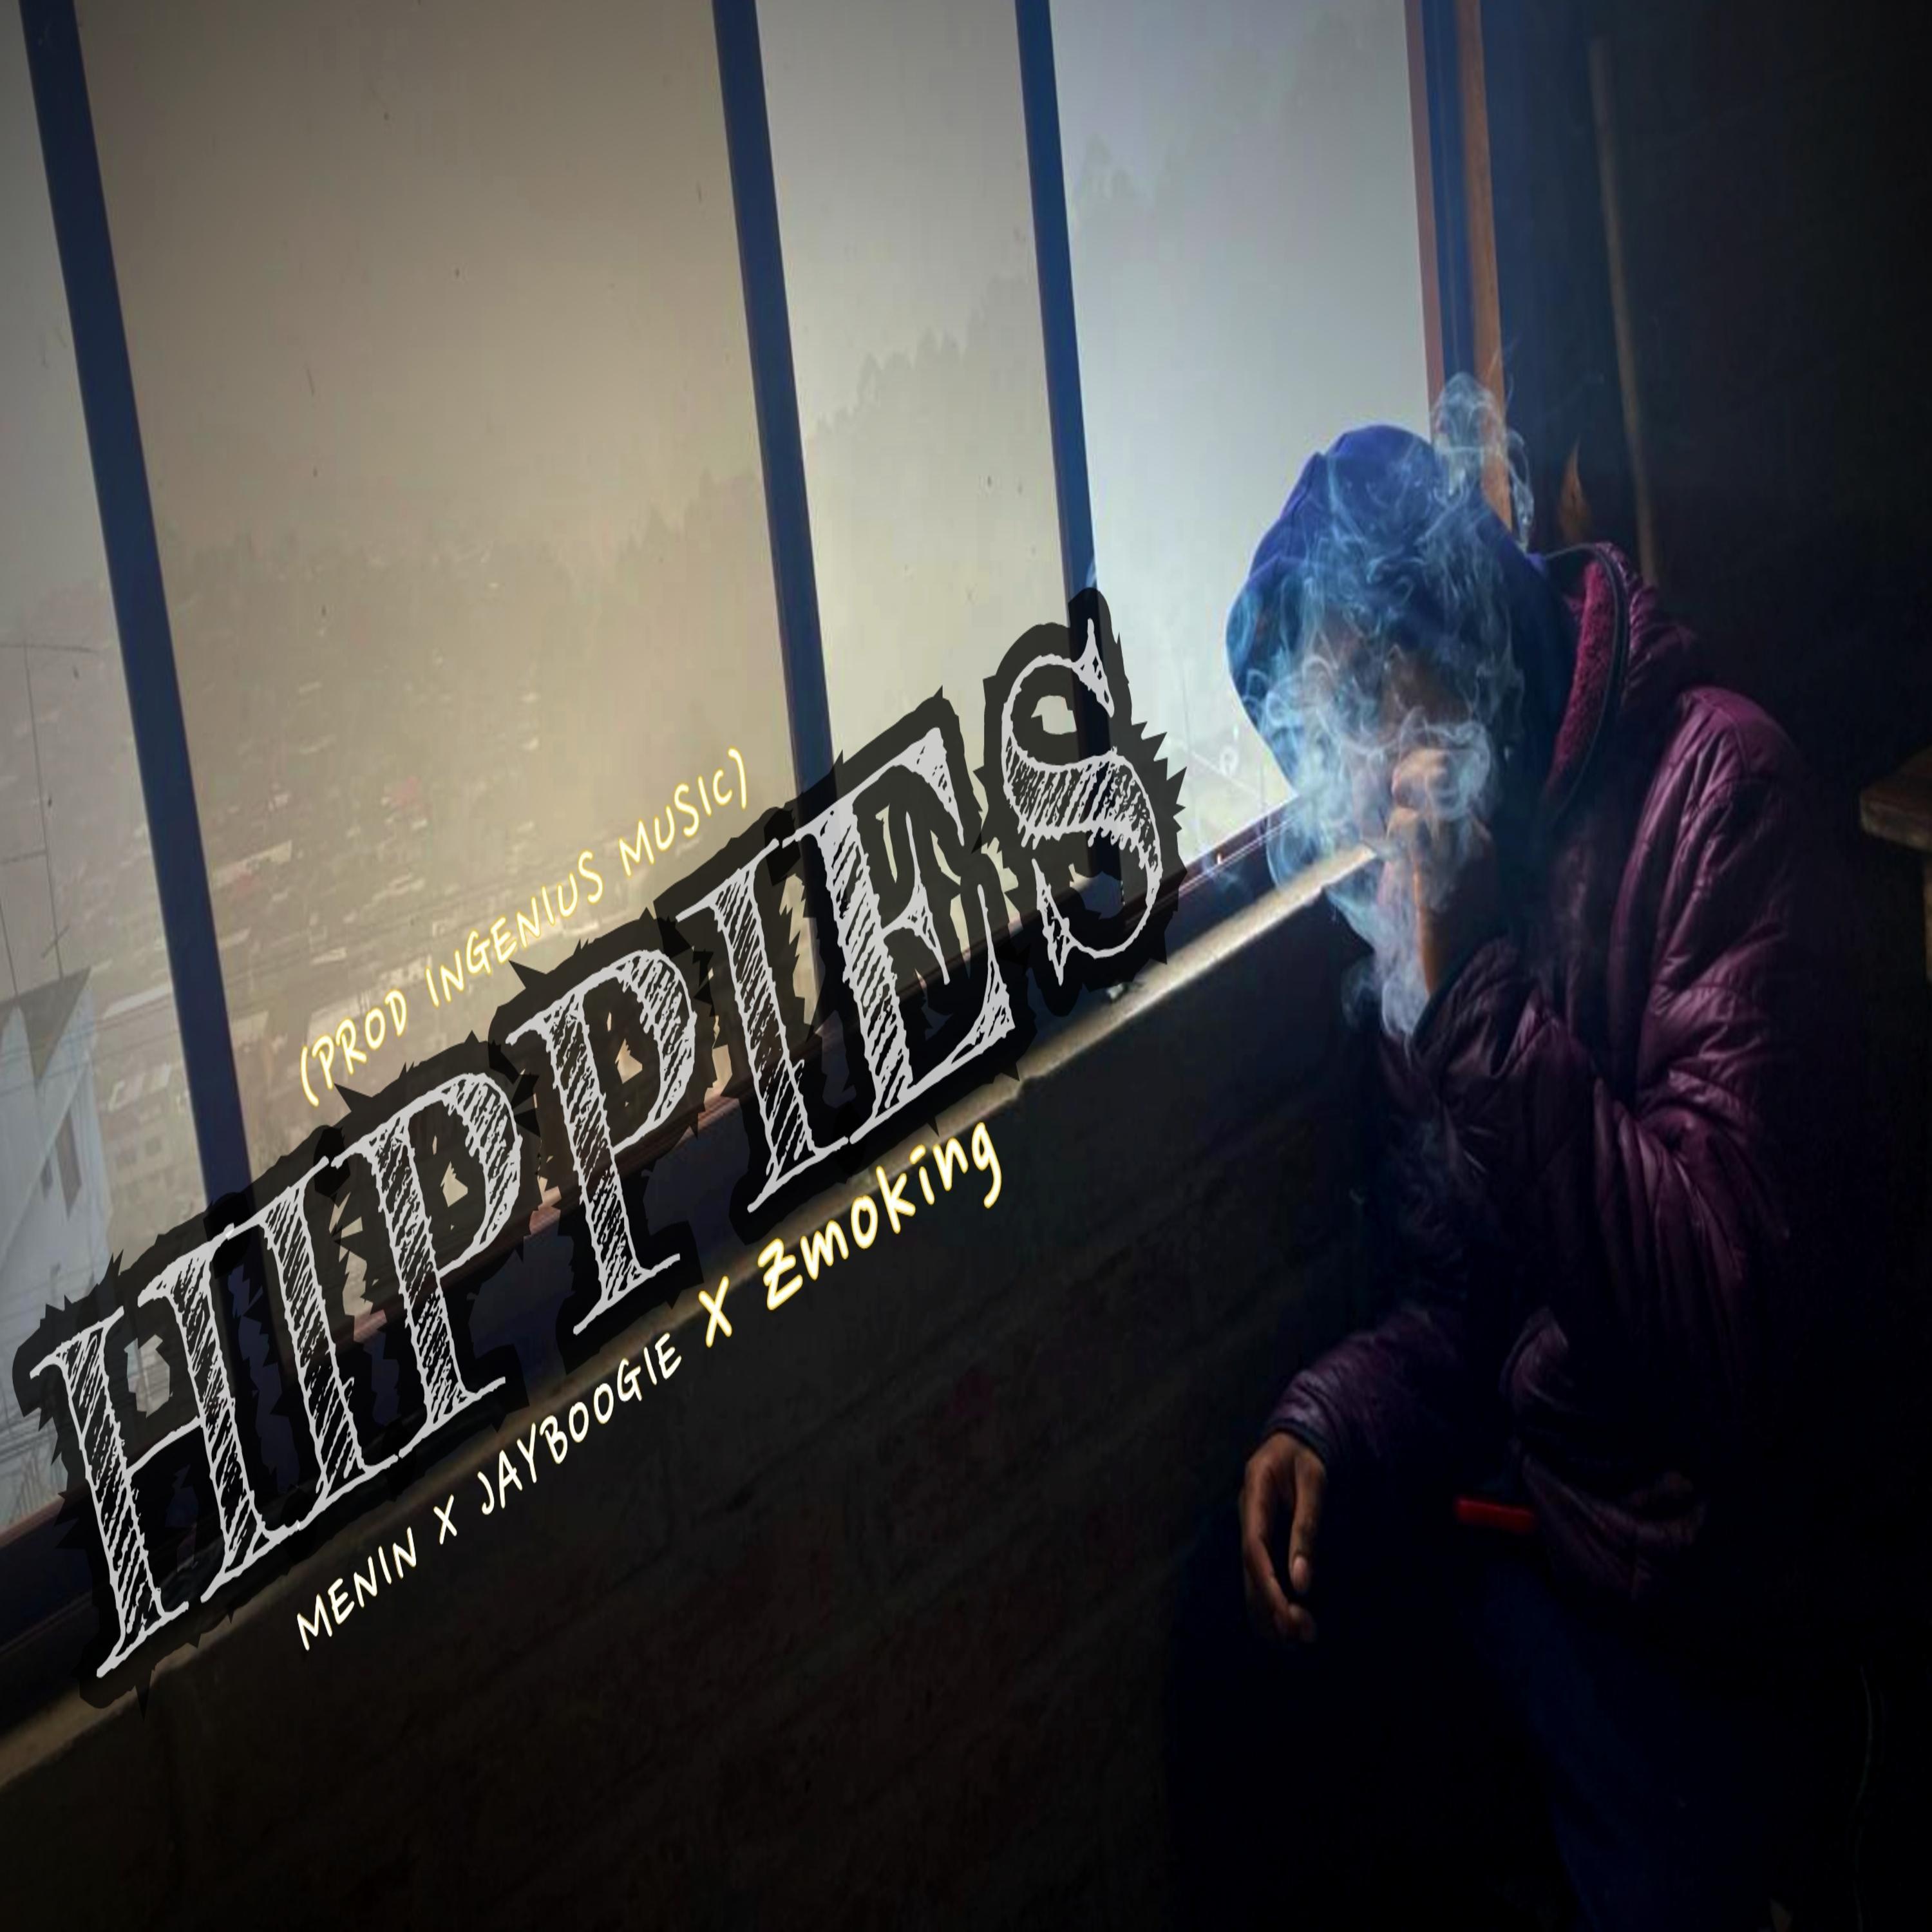 Menin ec - HIPPIES (feat. Bvgy & Zmooking)